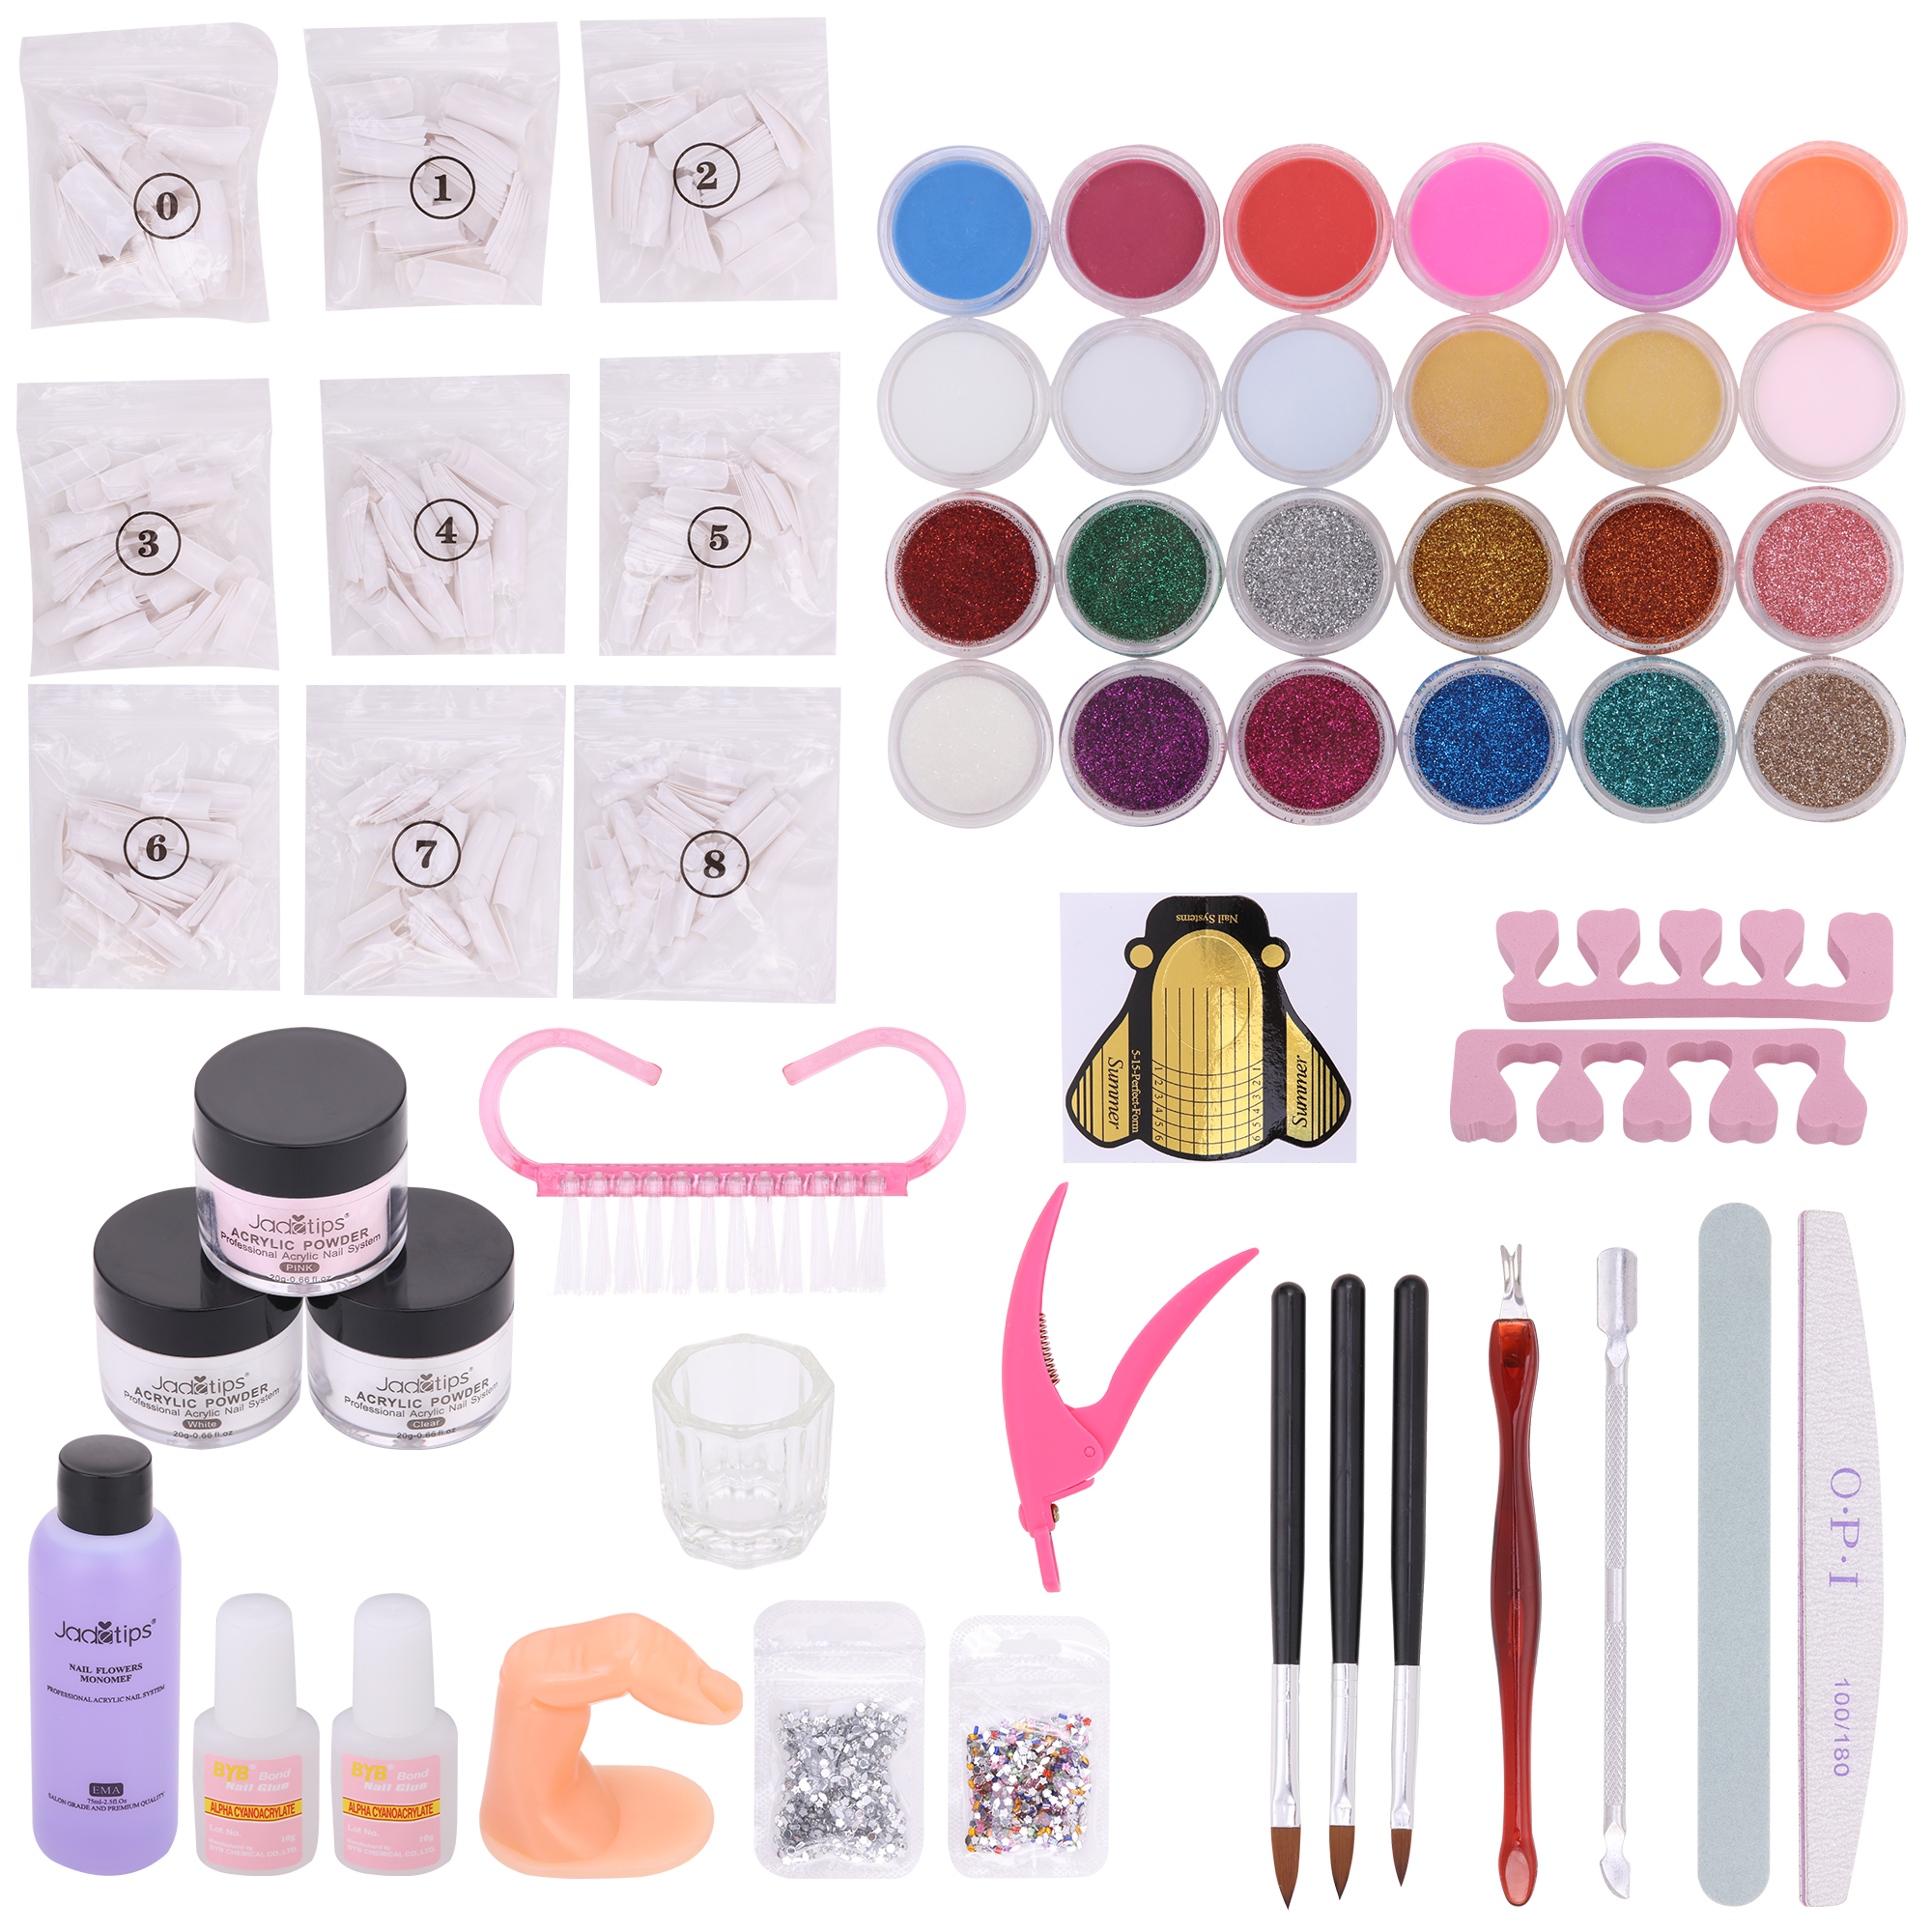 Acrylic Nail Kit for Beginners, Professional Acrylic Nail Powder and Liquid Kit Clear White Pink Acrylic Nail Set for DIY Nail Art Design - image 1 of 8